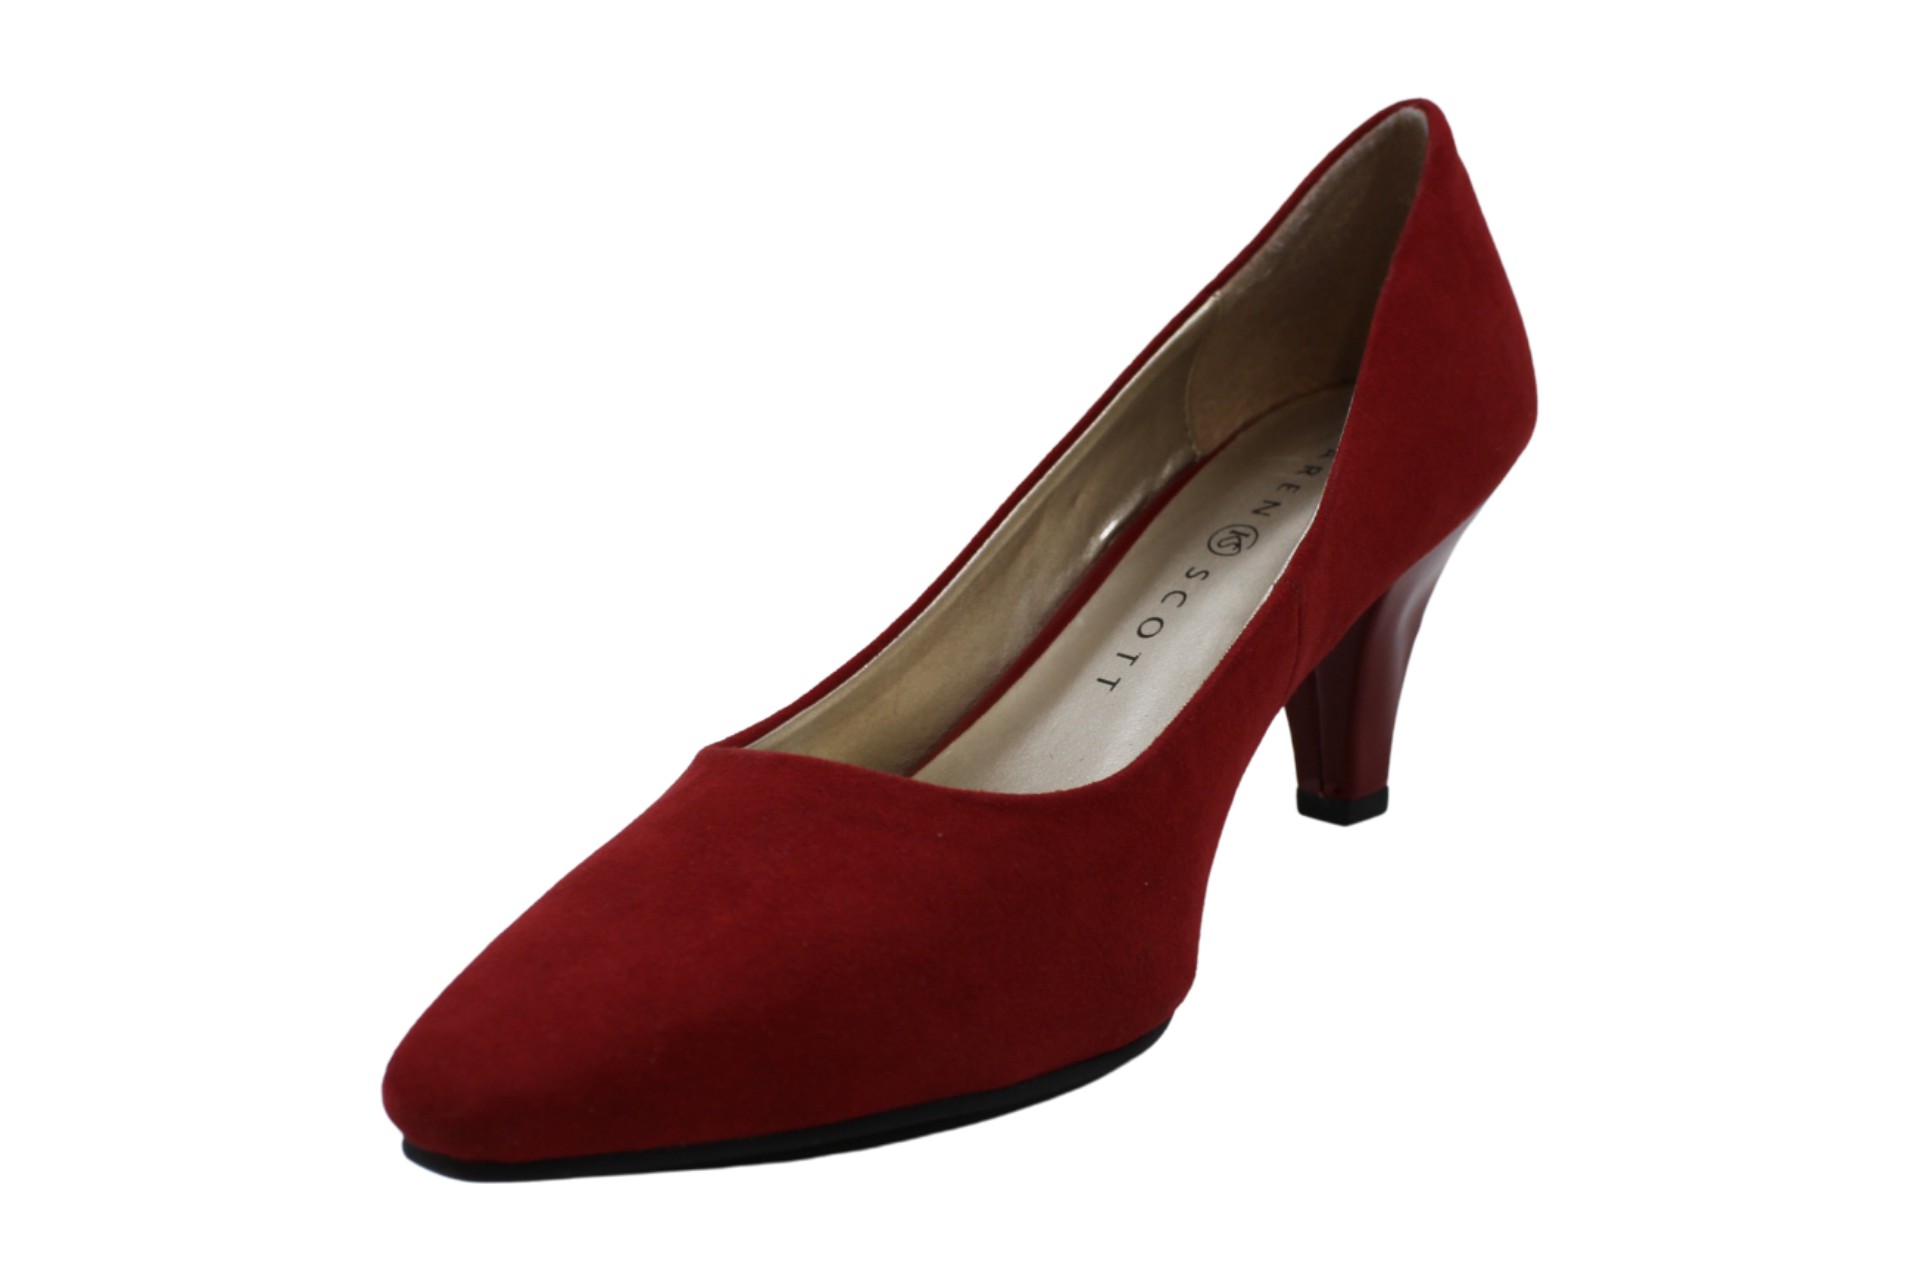 Karen Scott Women's Shoes bhma92 Heels & Pumps, Red, Size 5.0 xn7N | eBay